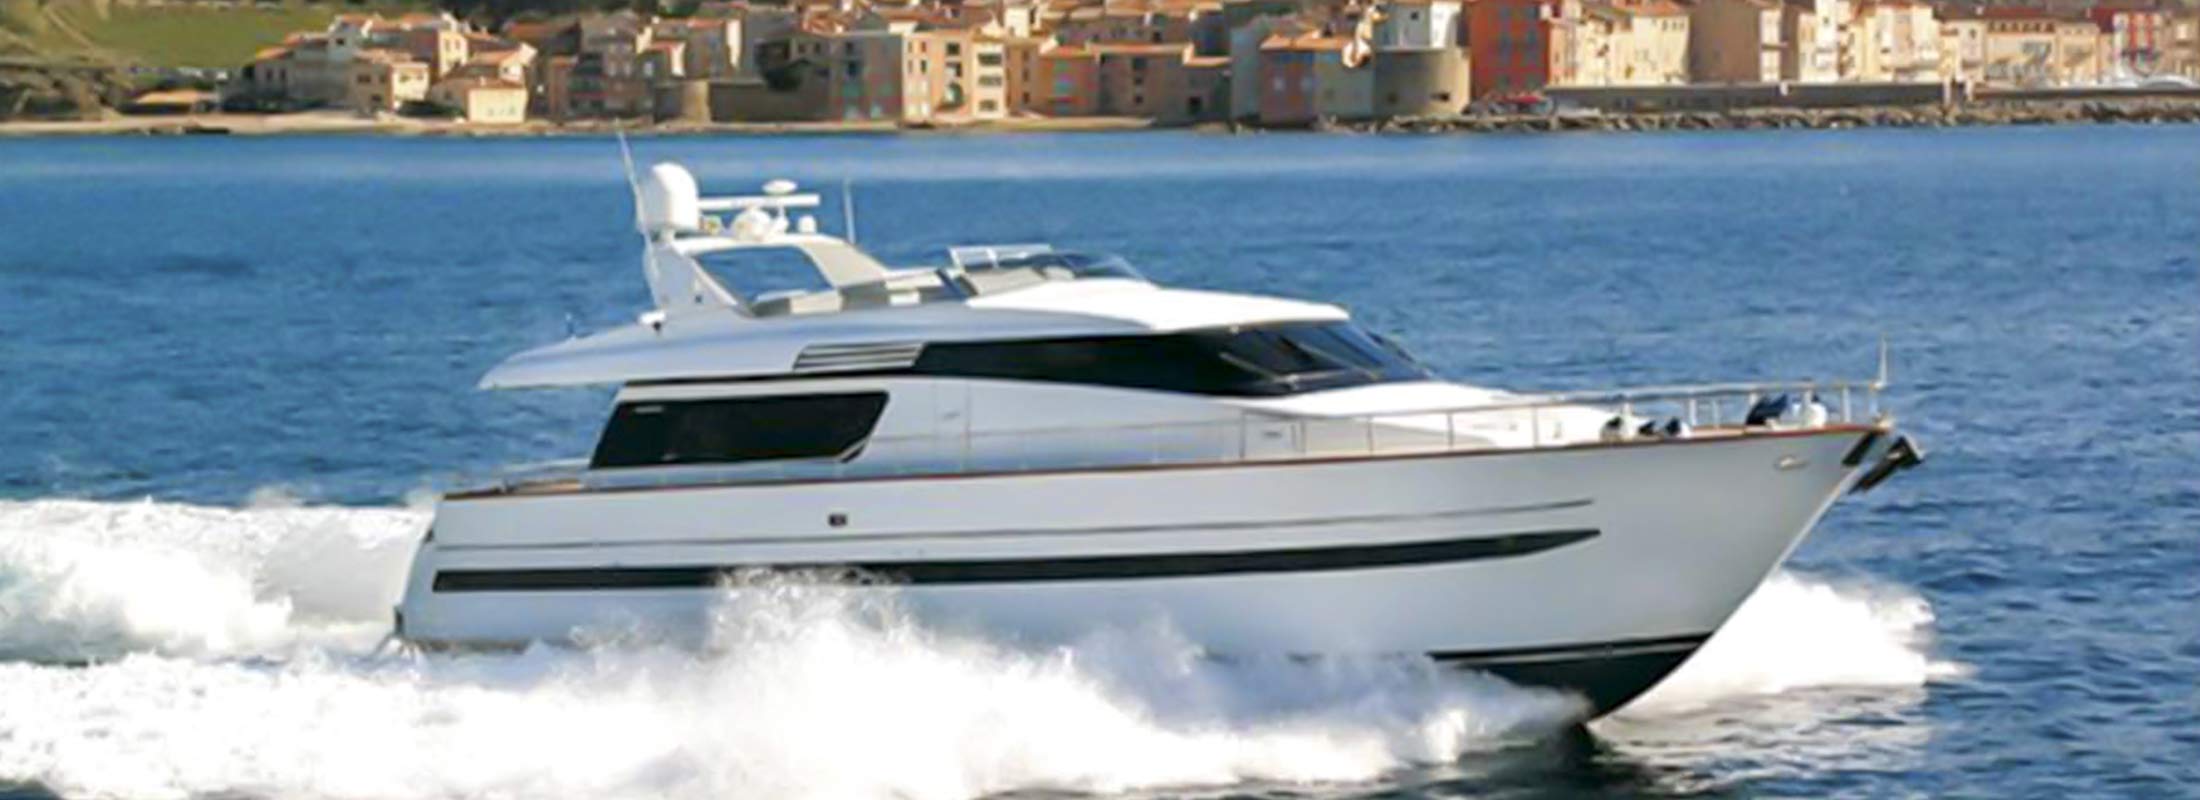 BST Motor Yacht for Charter Mediterranean slider 1